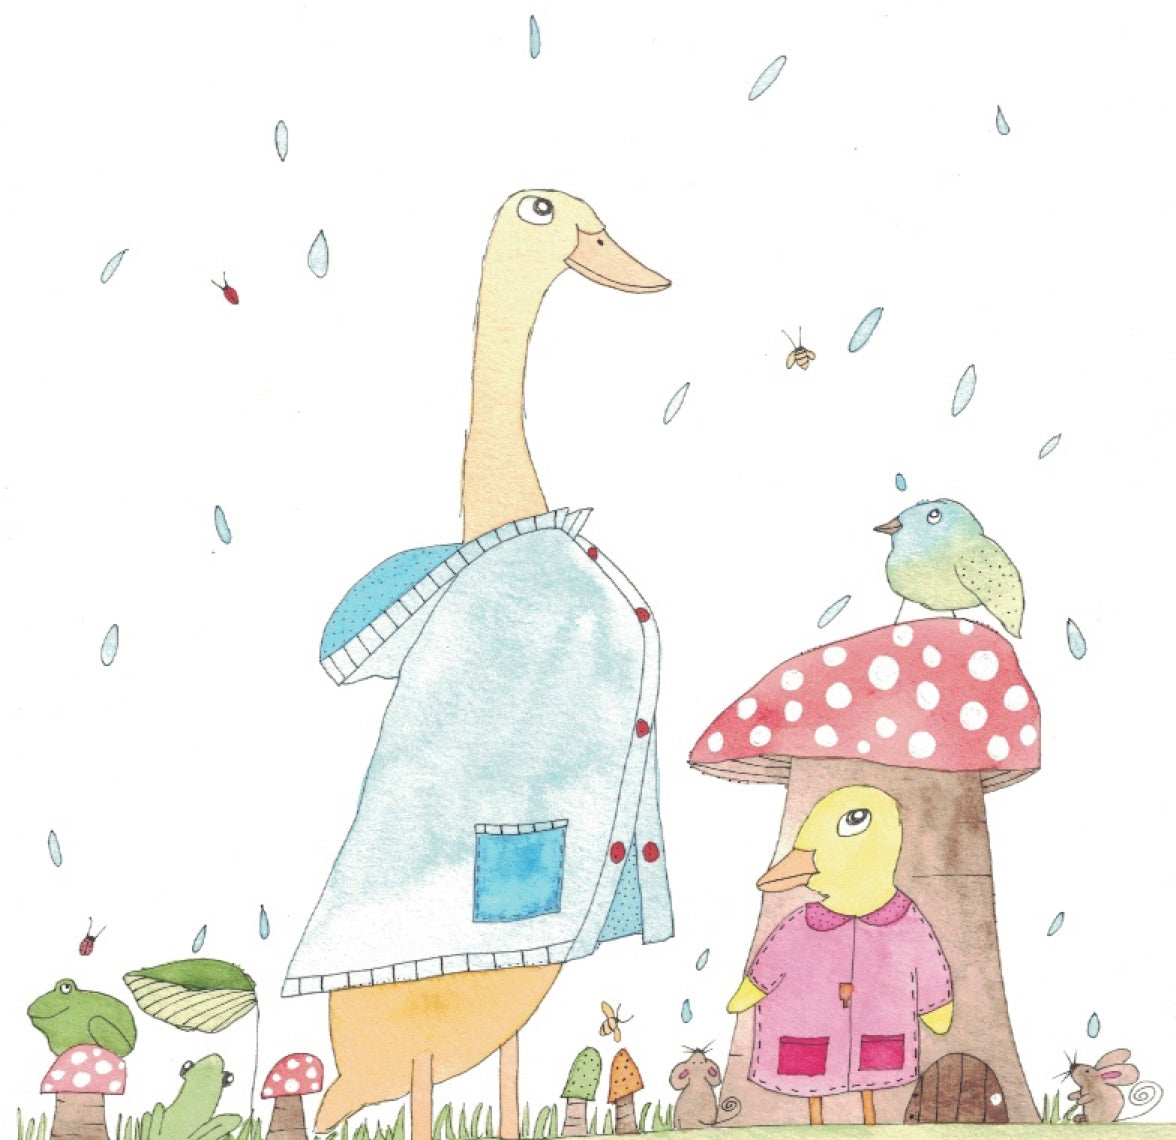 Greeting Card "Ducks in raincoats"